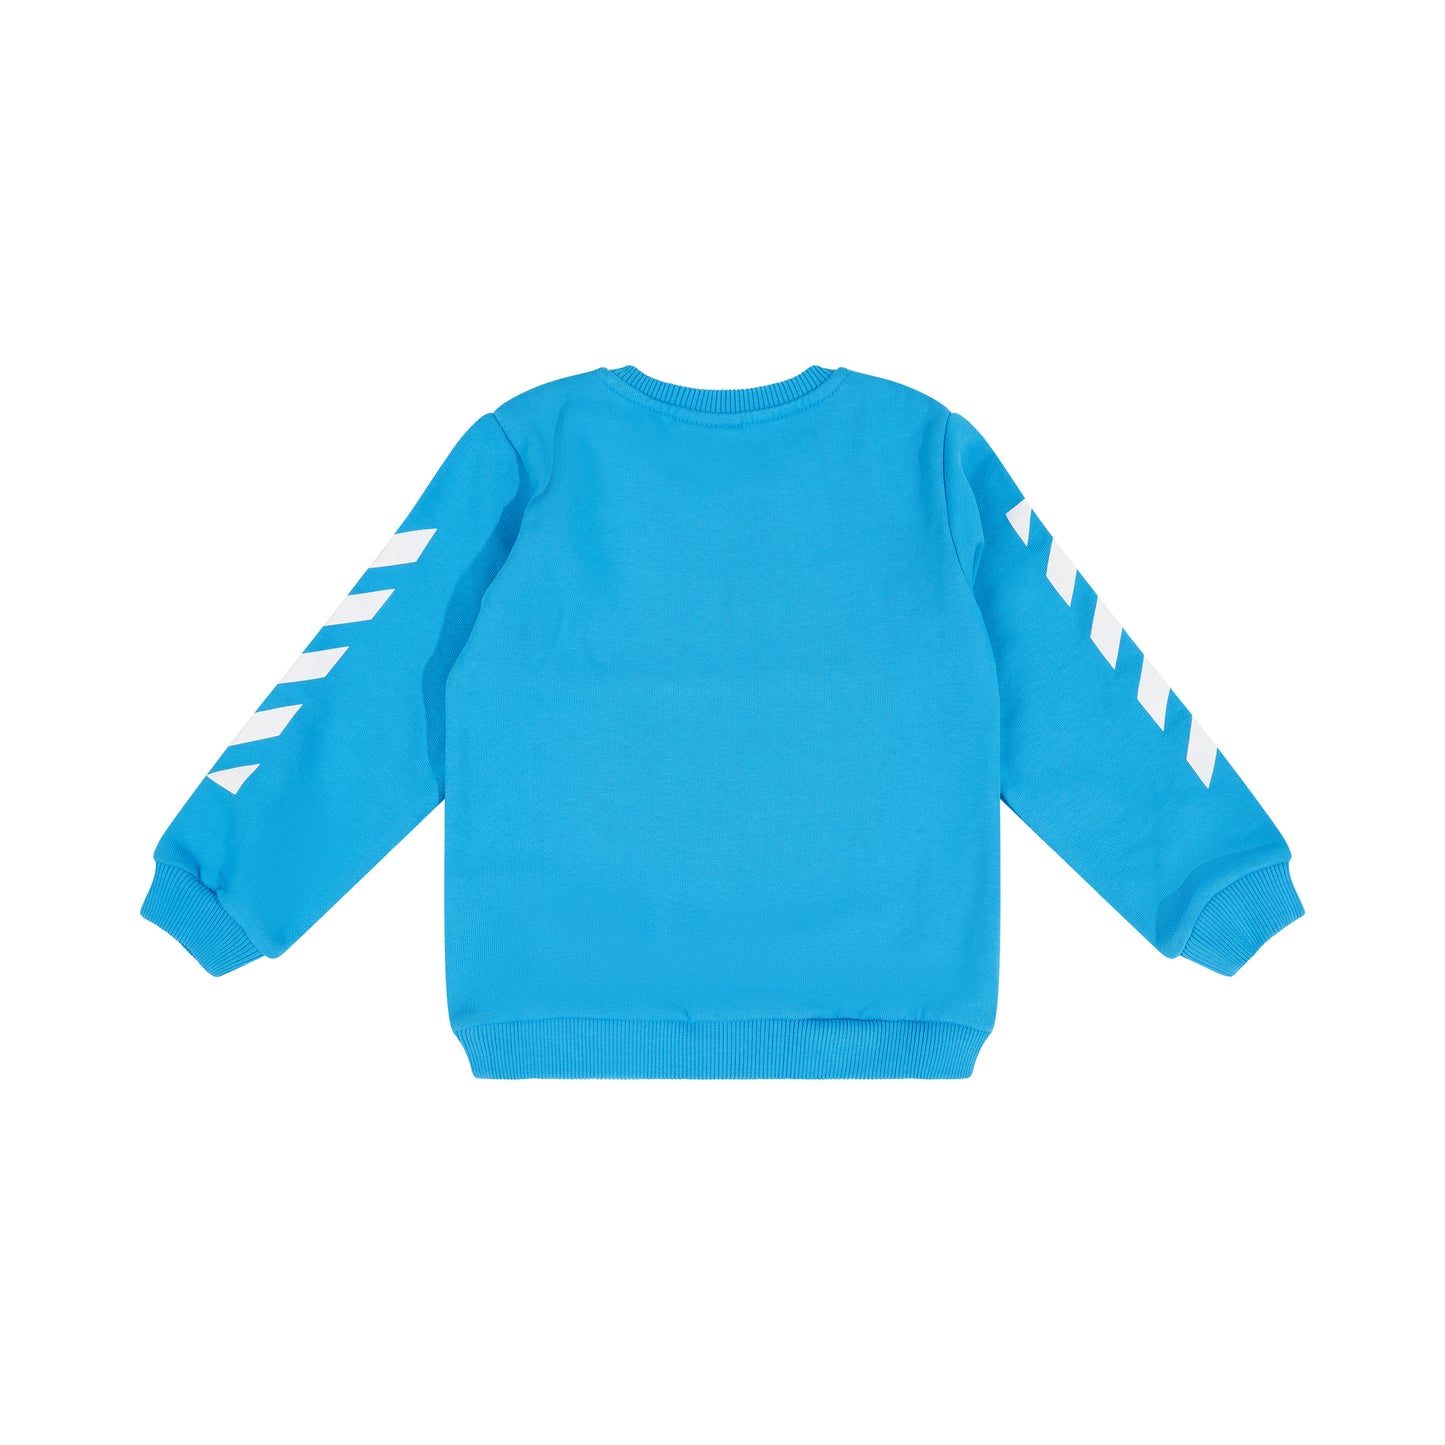 Helvetica Diagonal Sweatshirt Set in Blue/White